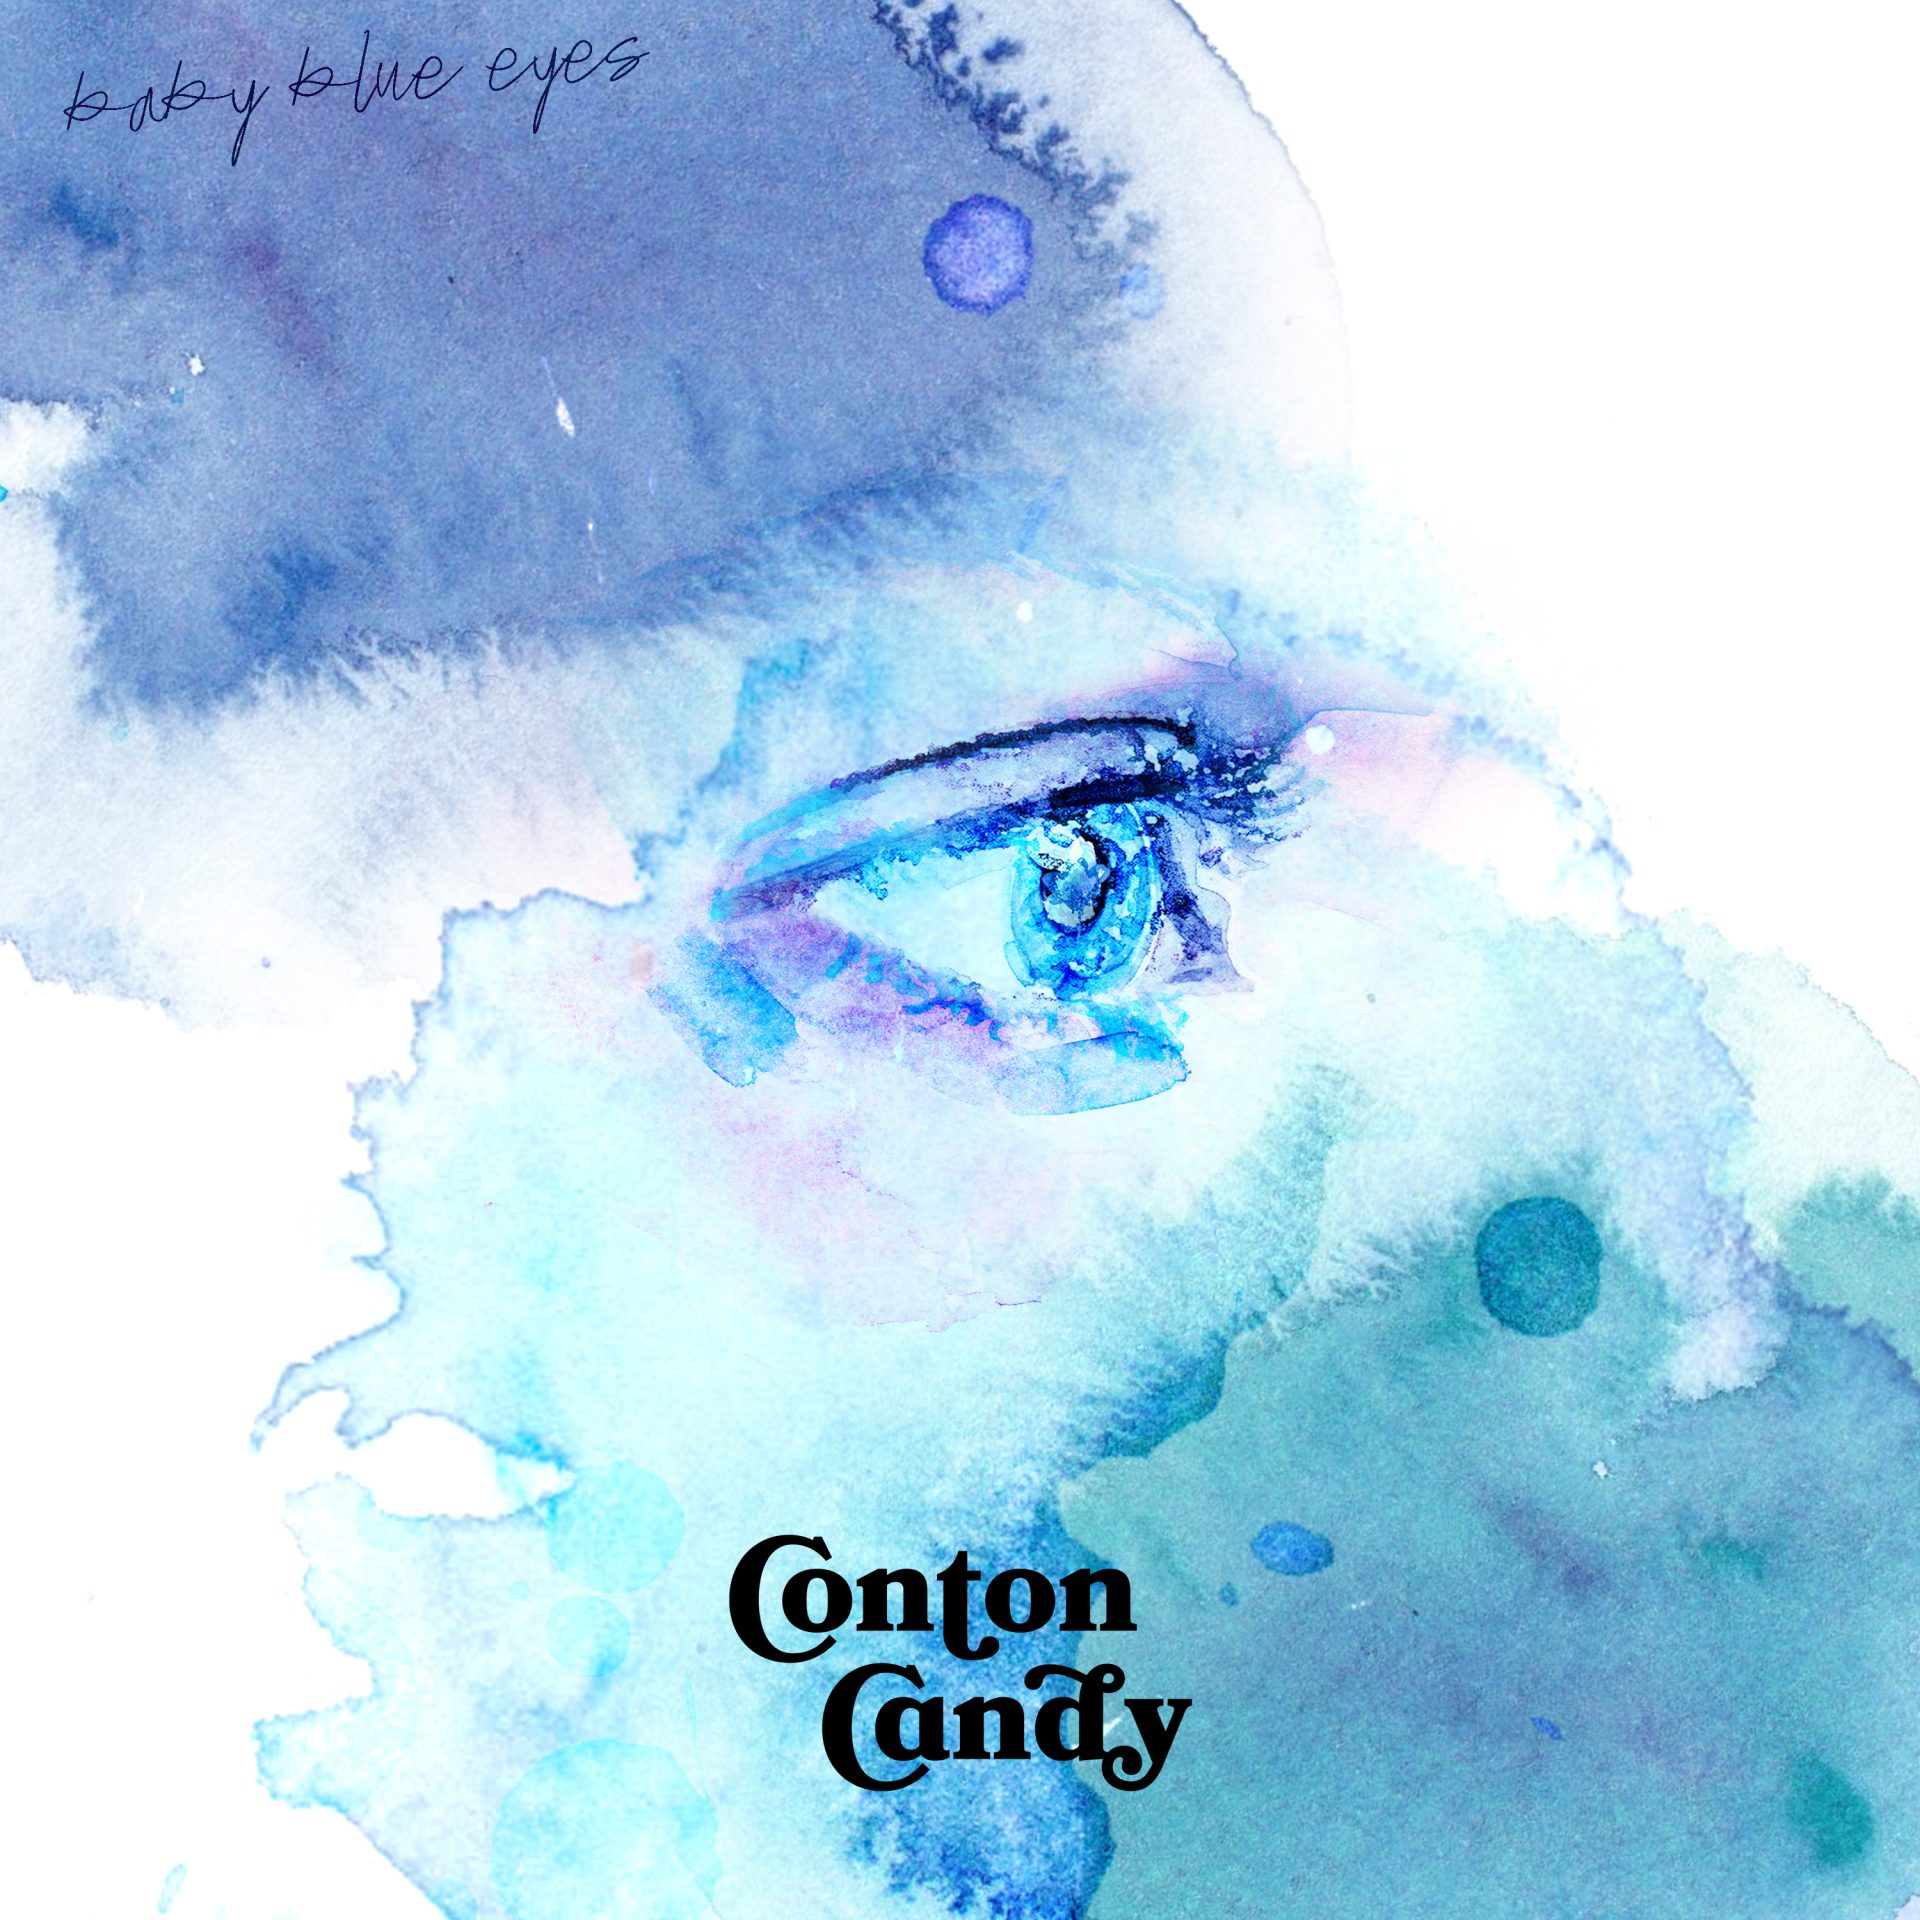 Conton Candy / baby blue eyes